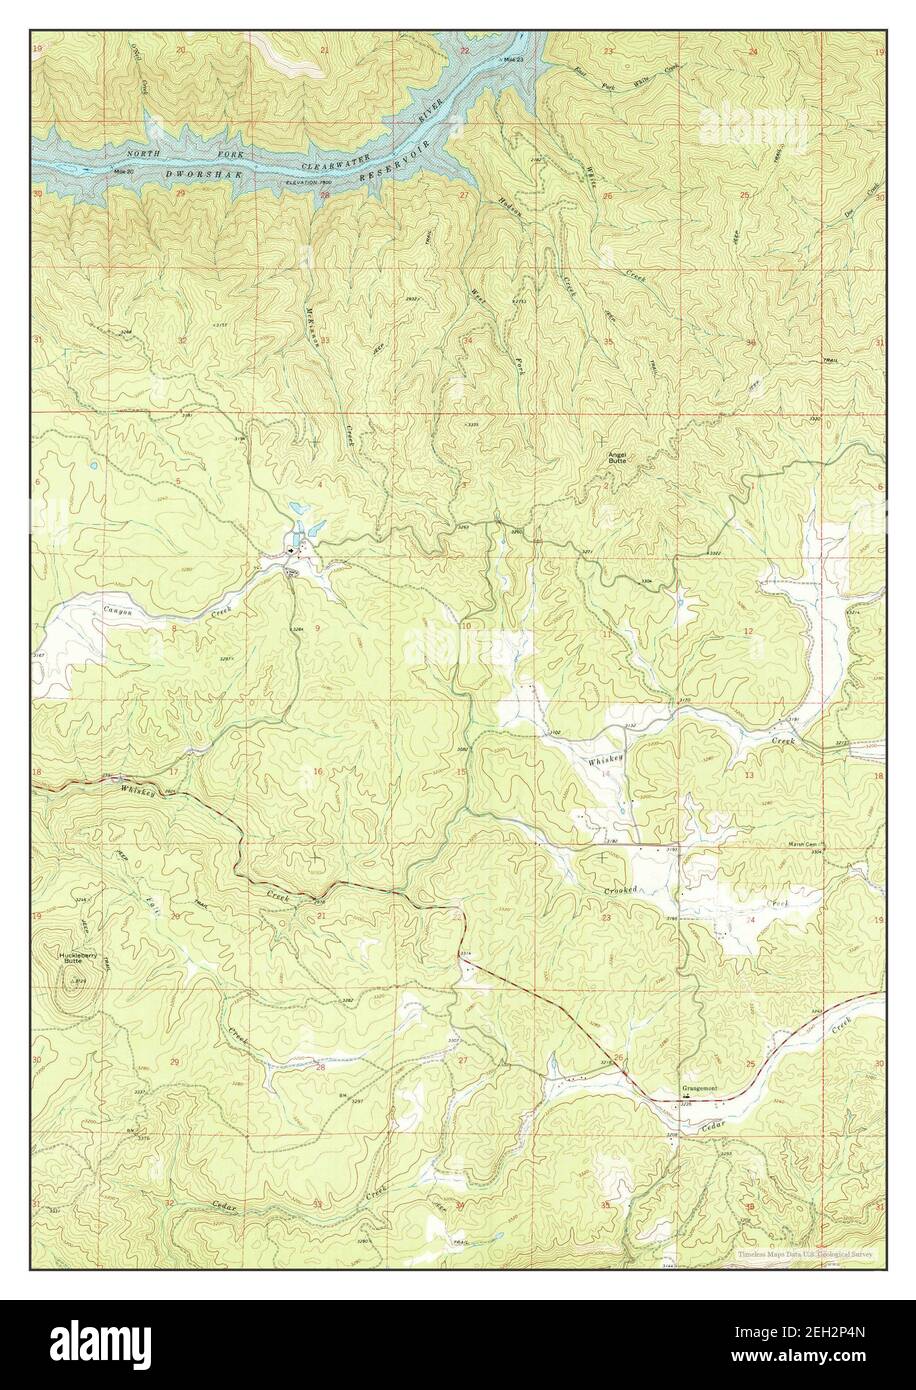 Grangemont, Idaho, map 1969, 1:24000, United States of America by Timeless Maps, data U.S. Geological Survey Stock Photo